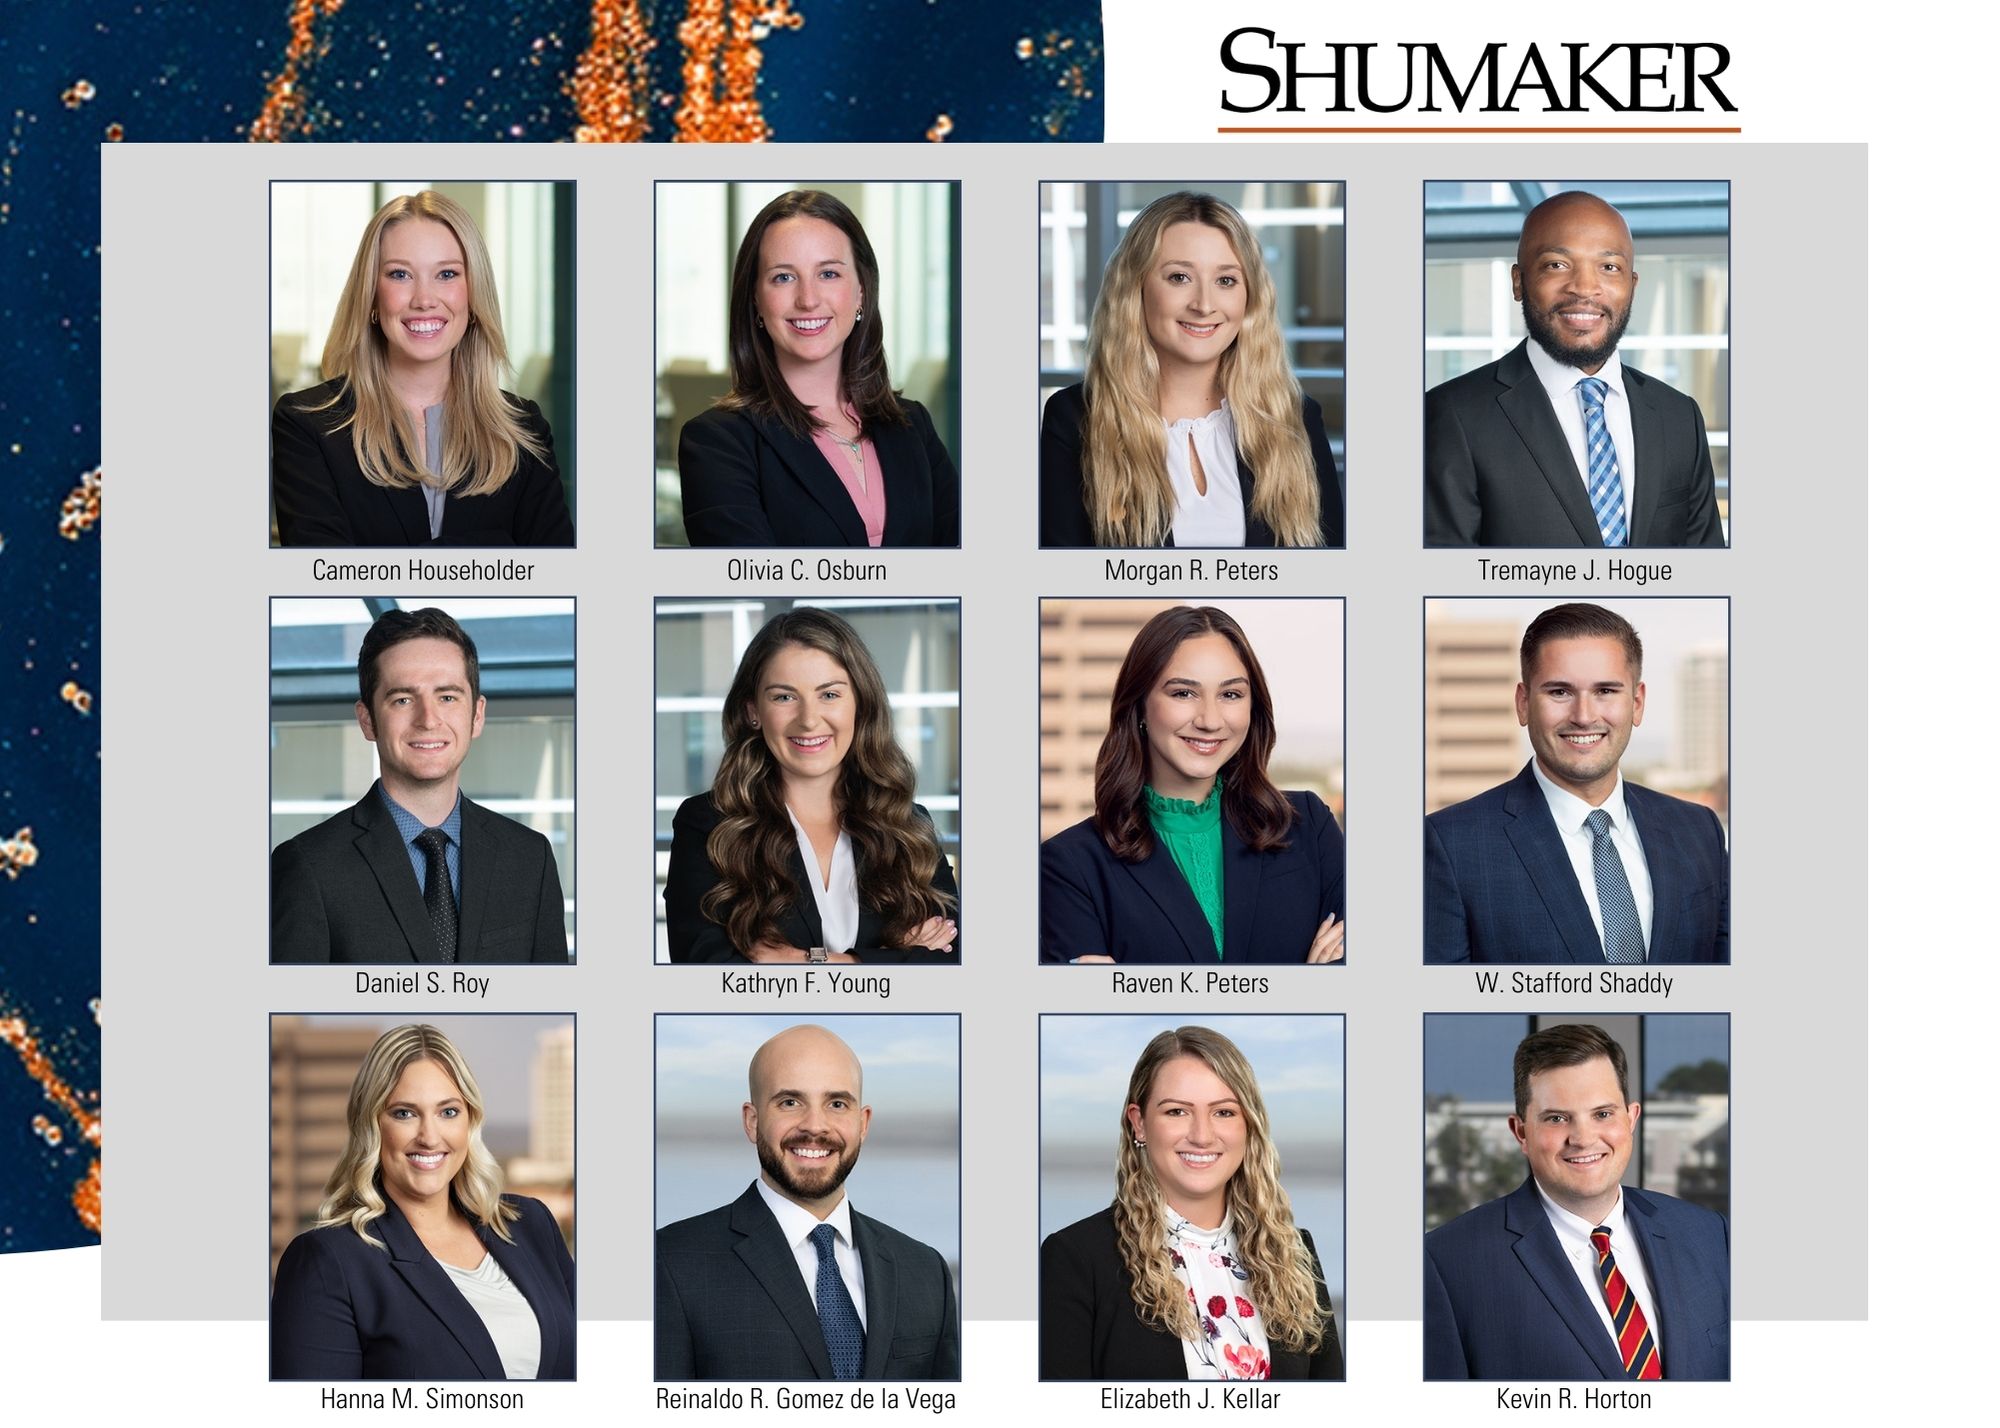 Shumaker New Associates, photo courtesy of Shumaker.